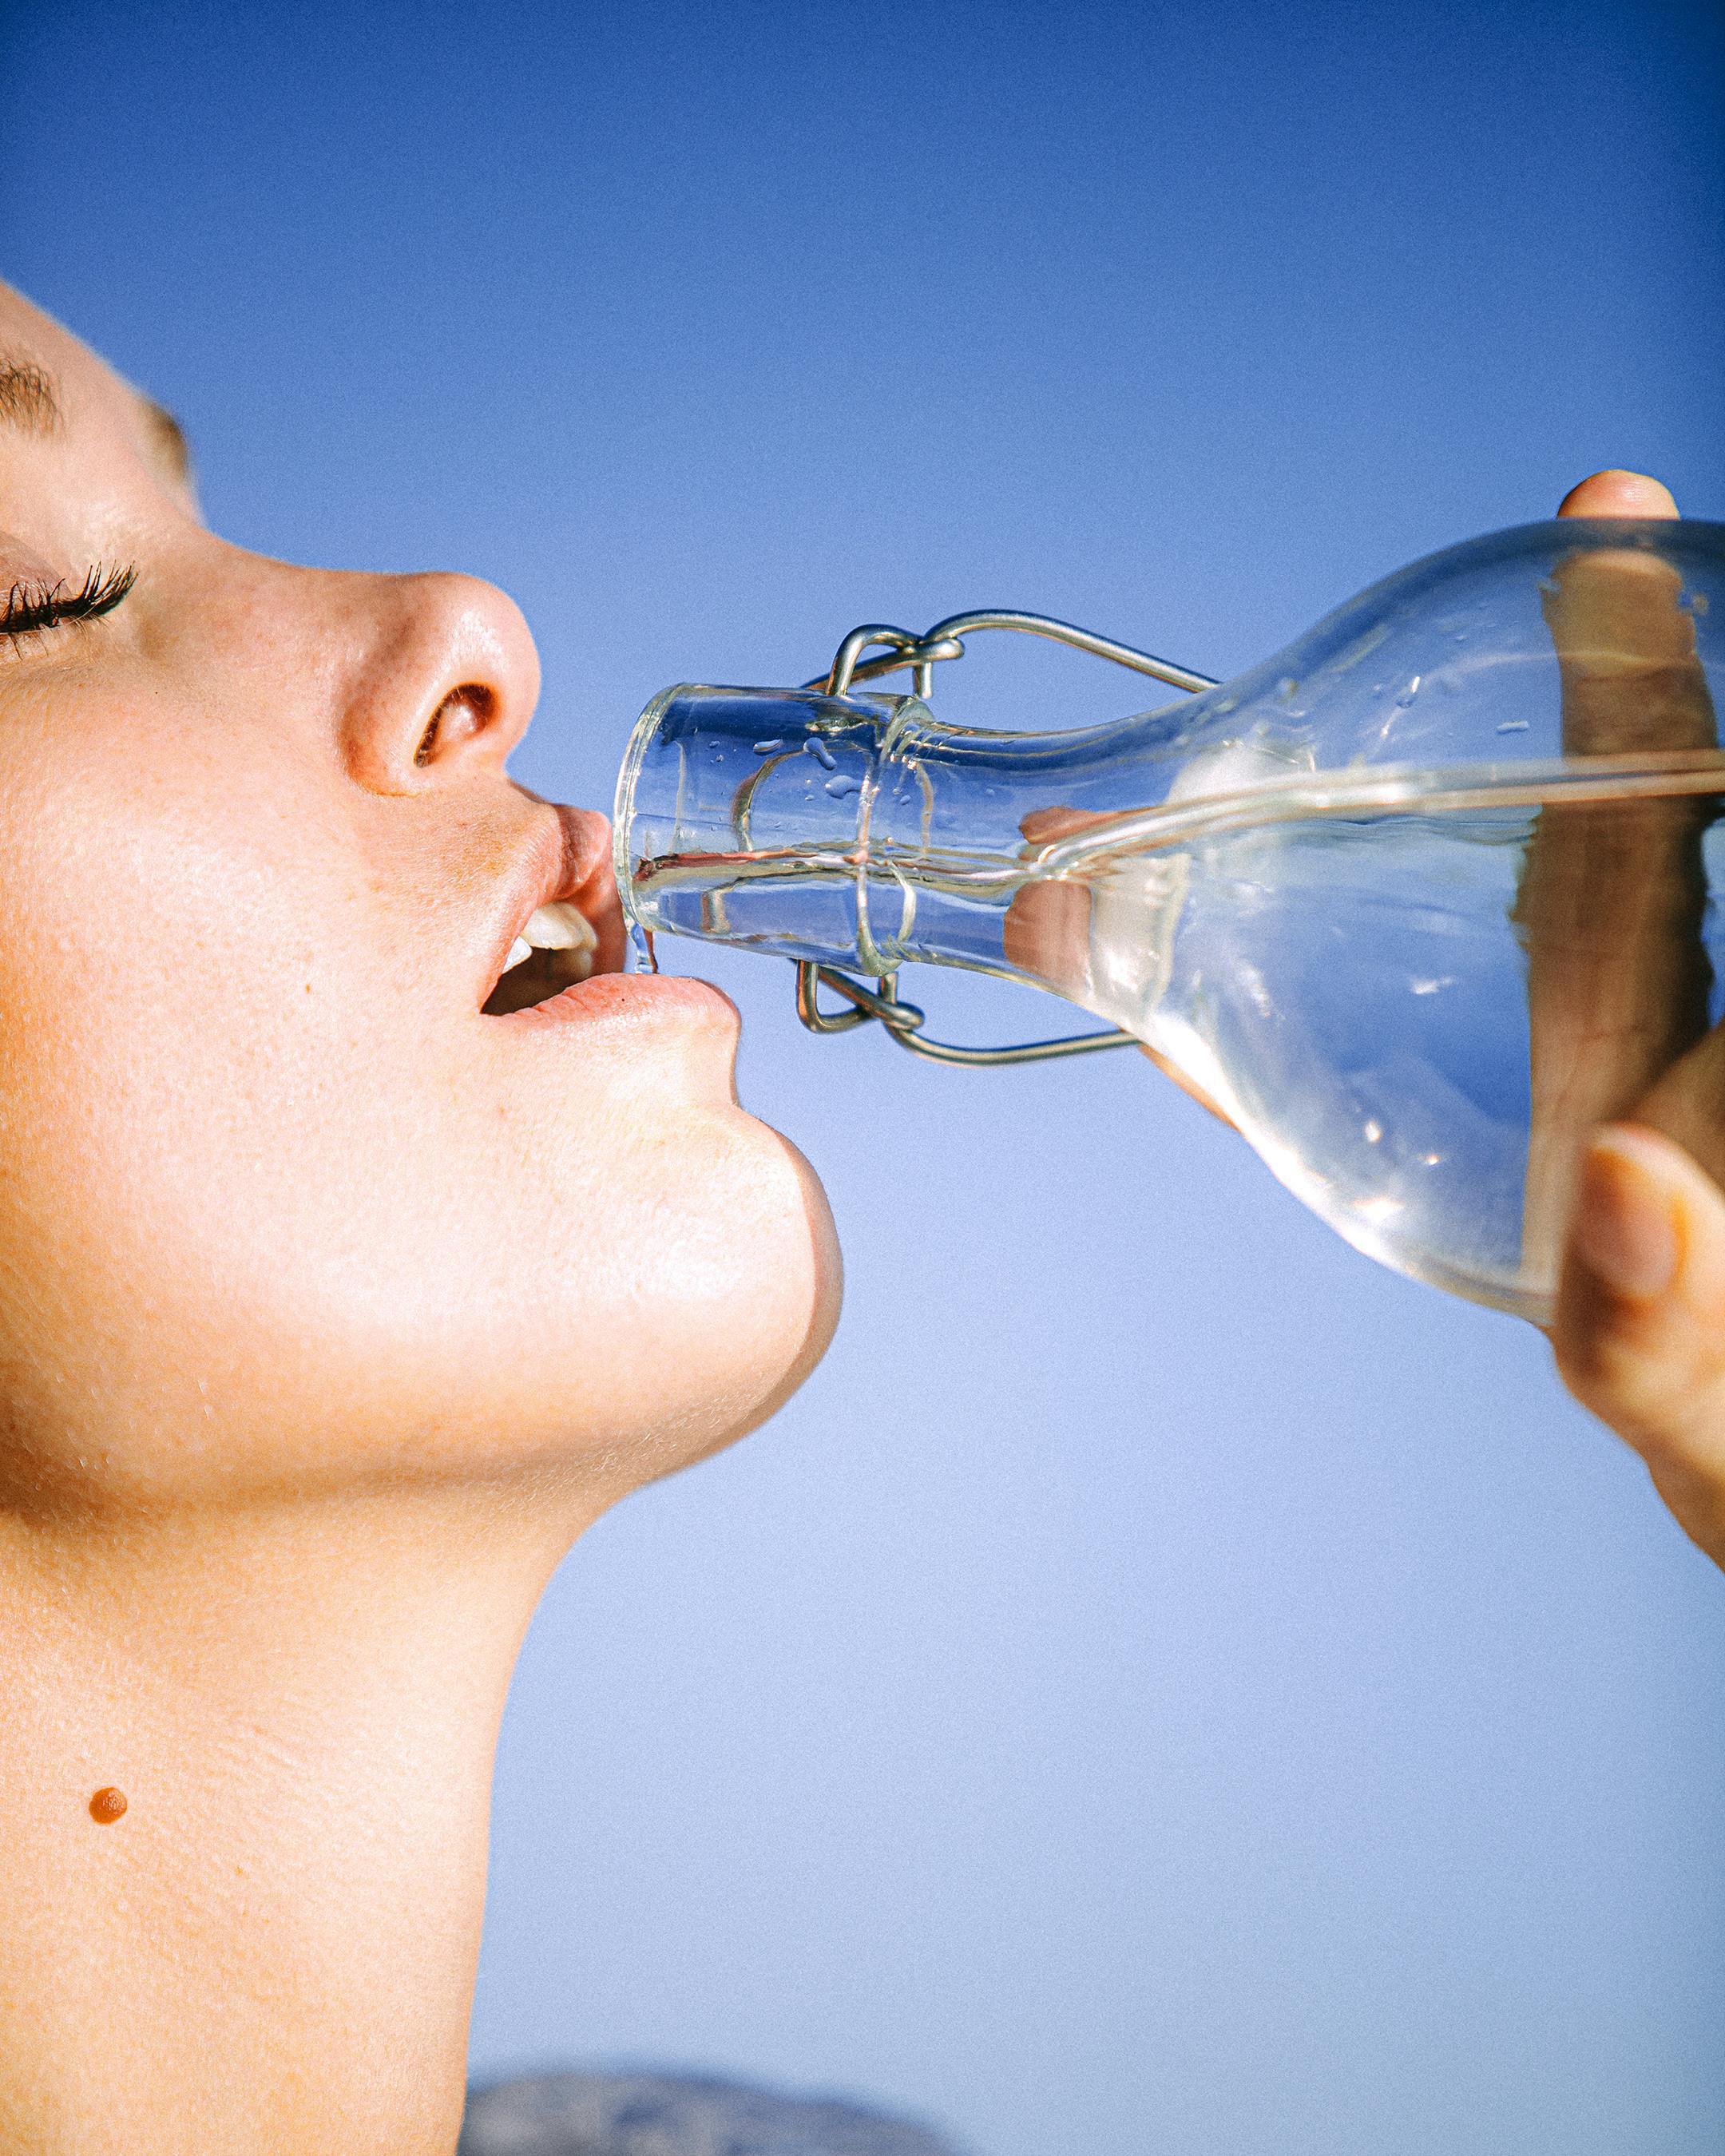 Otros consejos de belleza para eliminar las lneas de expresin de forma natural: beber mucha agua